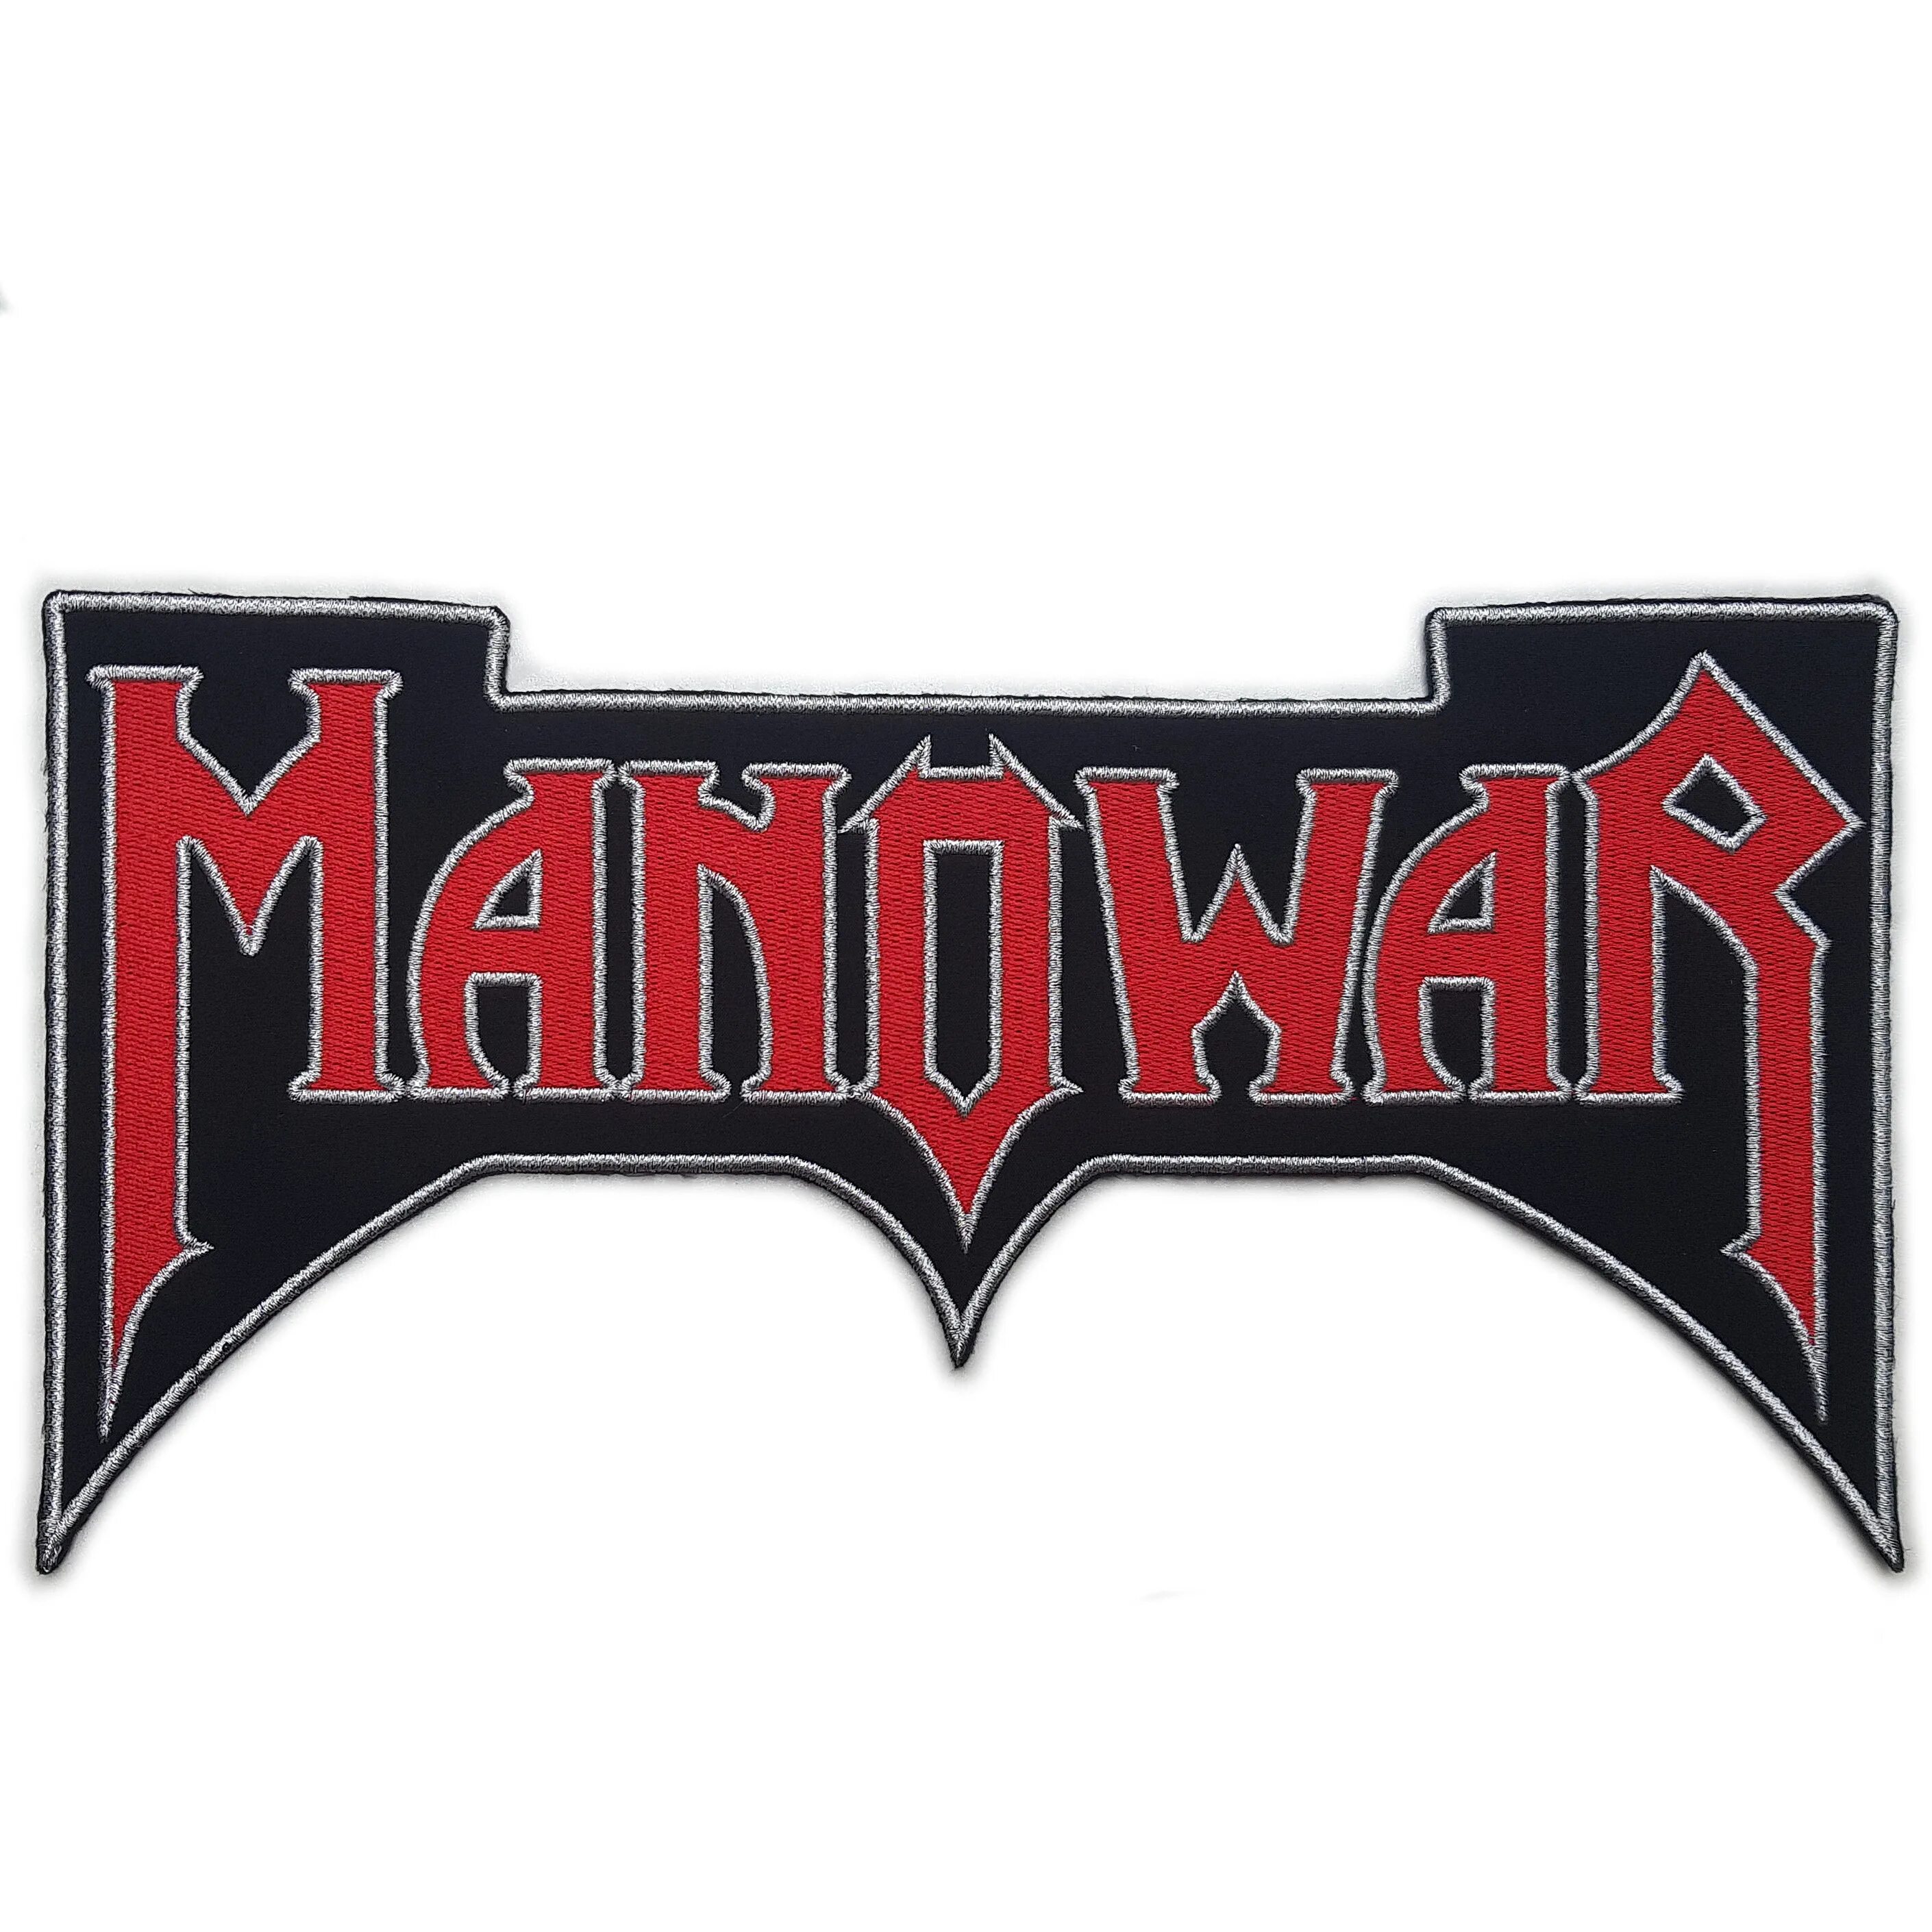 Manowar логотип группы. Мановар группа лого. Нашивка Manowar. Мановар надпись. Manowar тексты